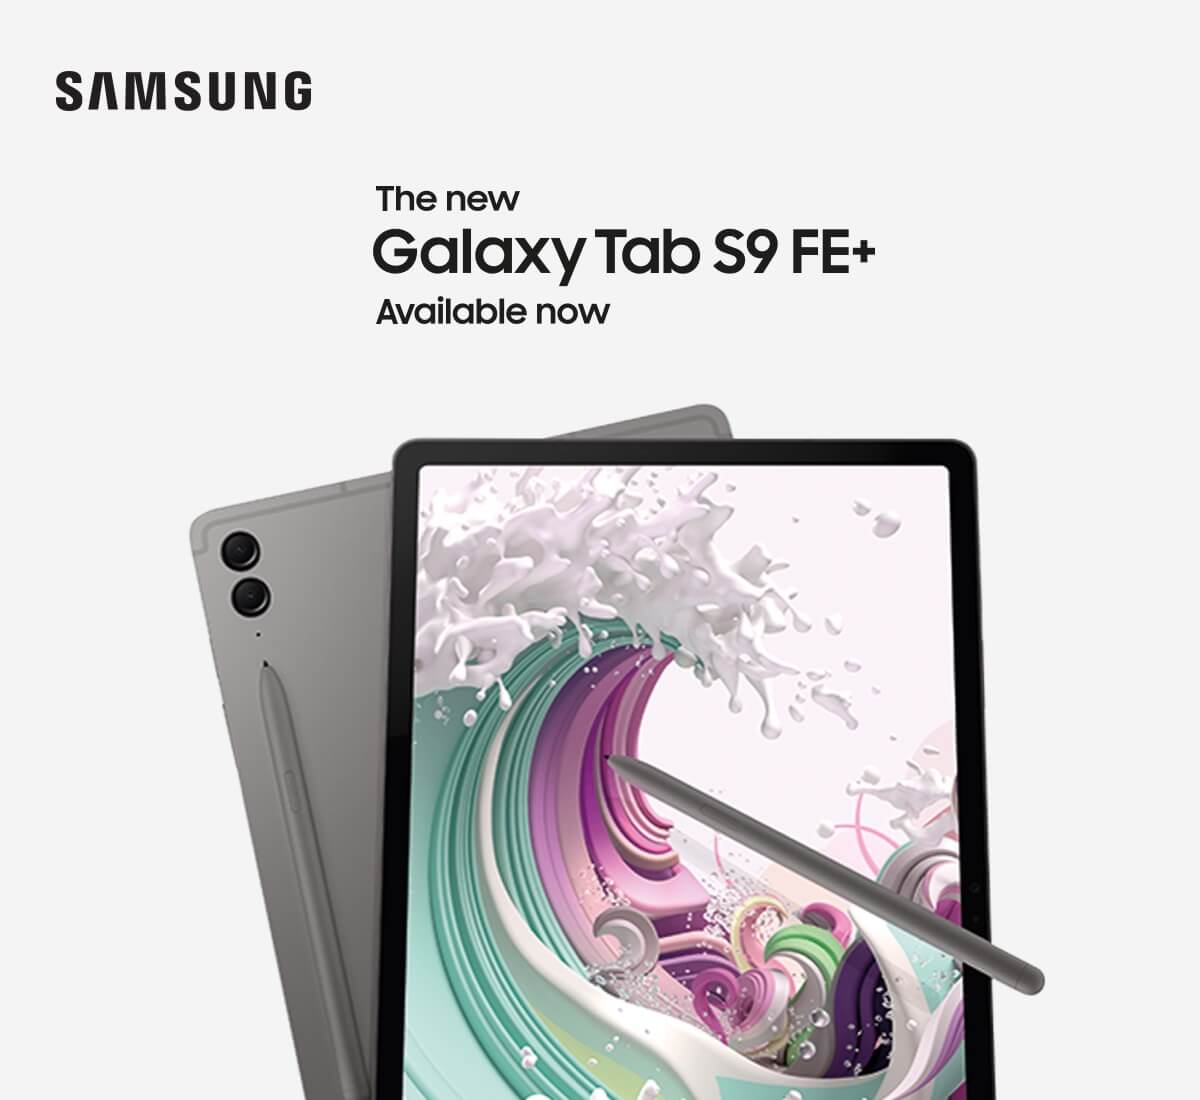 Buy the New Samsung Galaxy Tab S9 FE & Tab S9 FE+